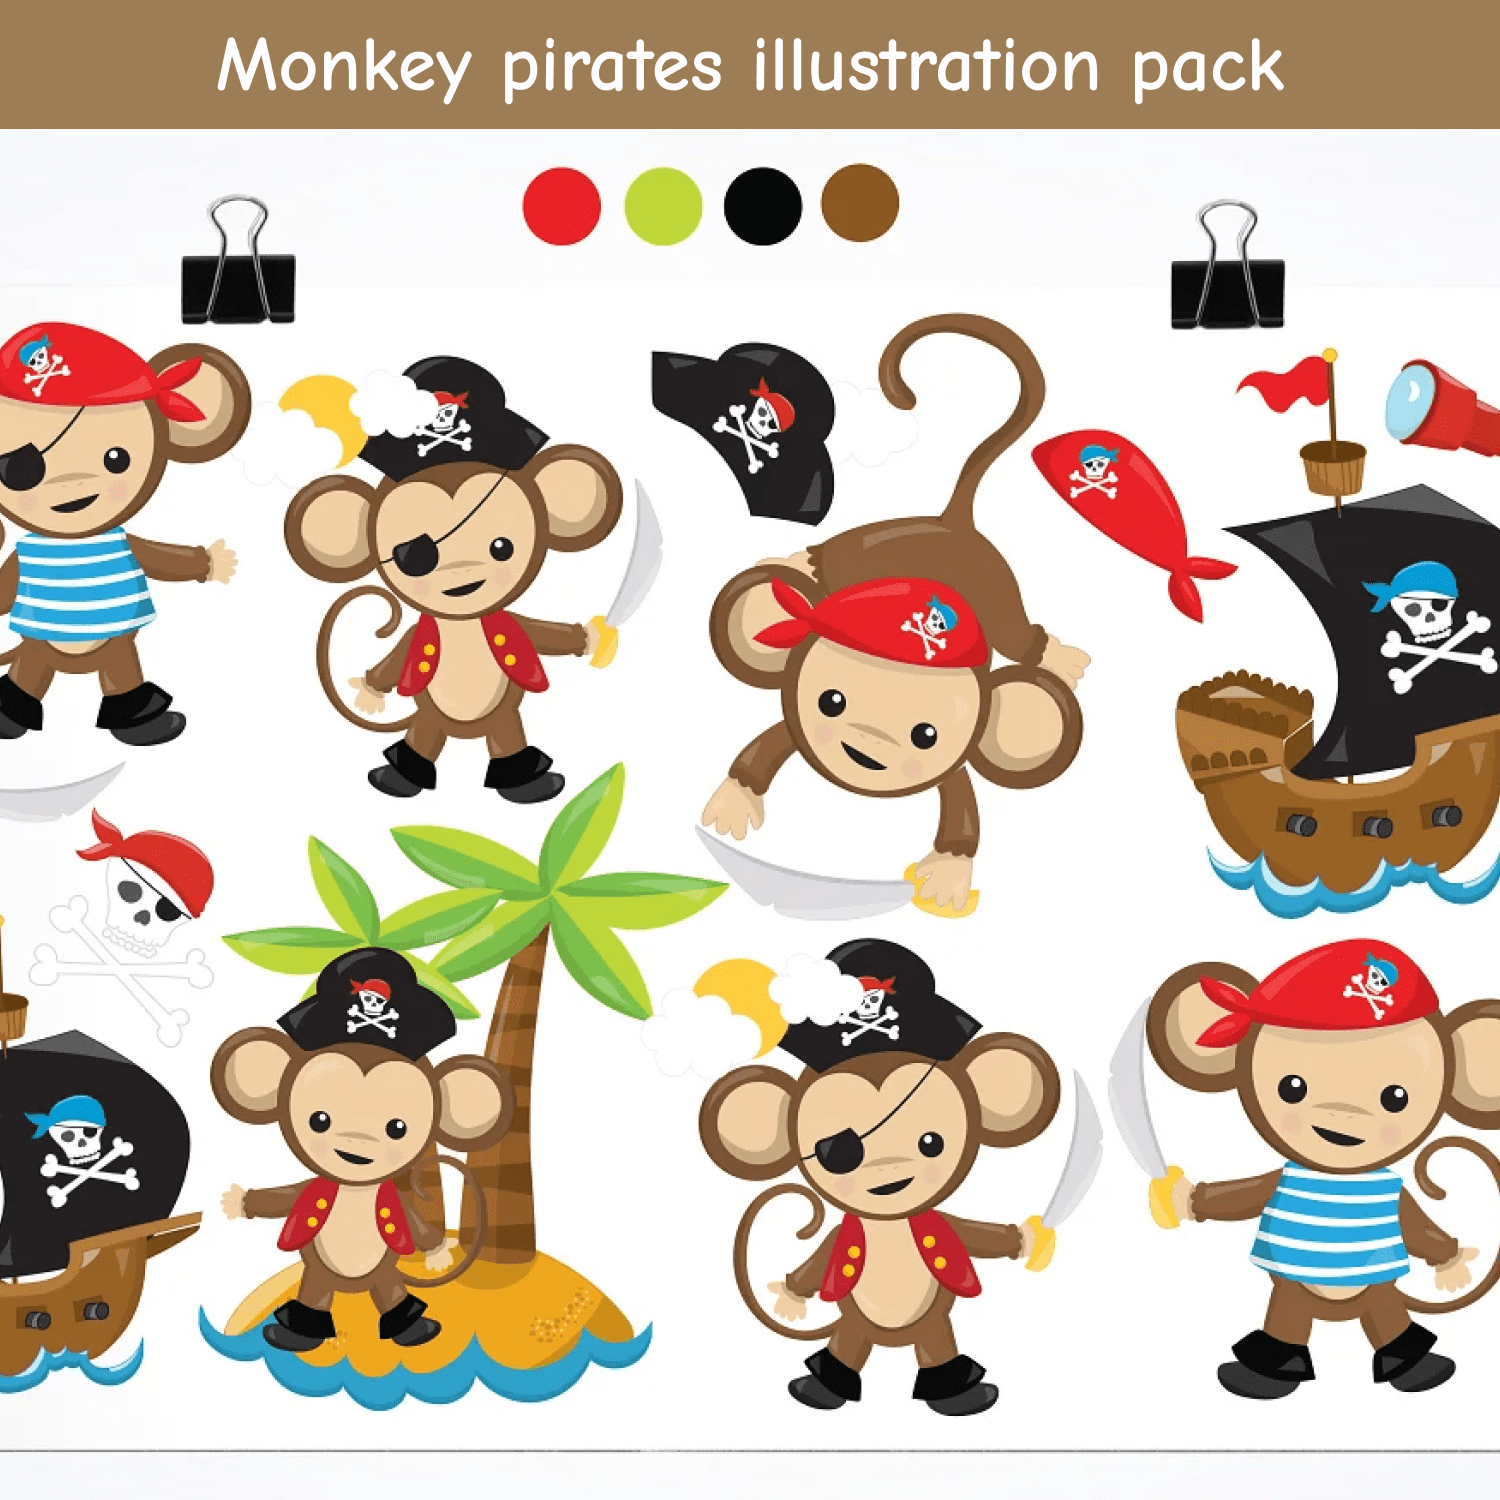 Monkey pirates illustration pack.